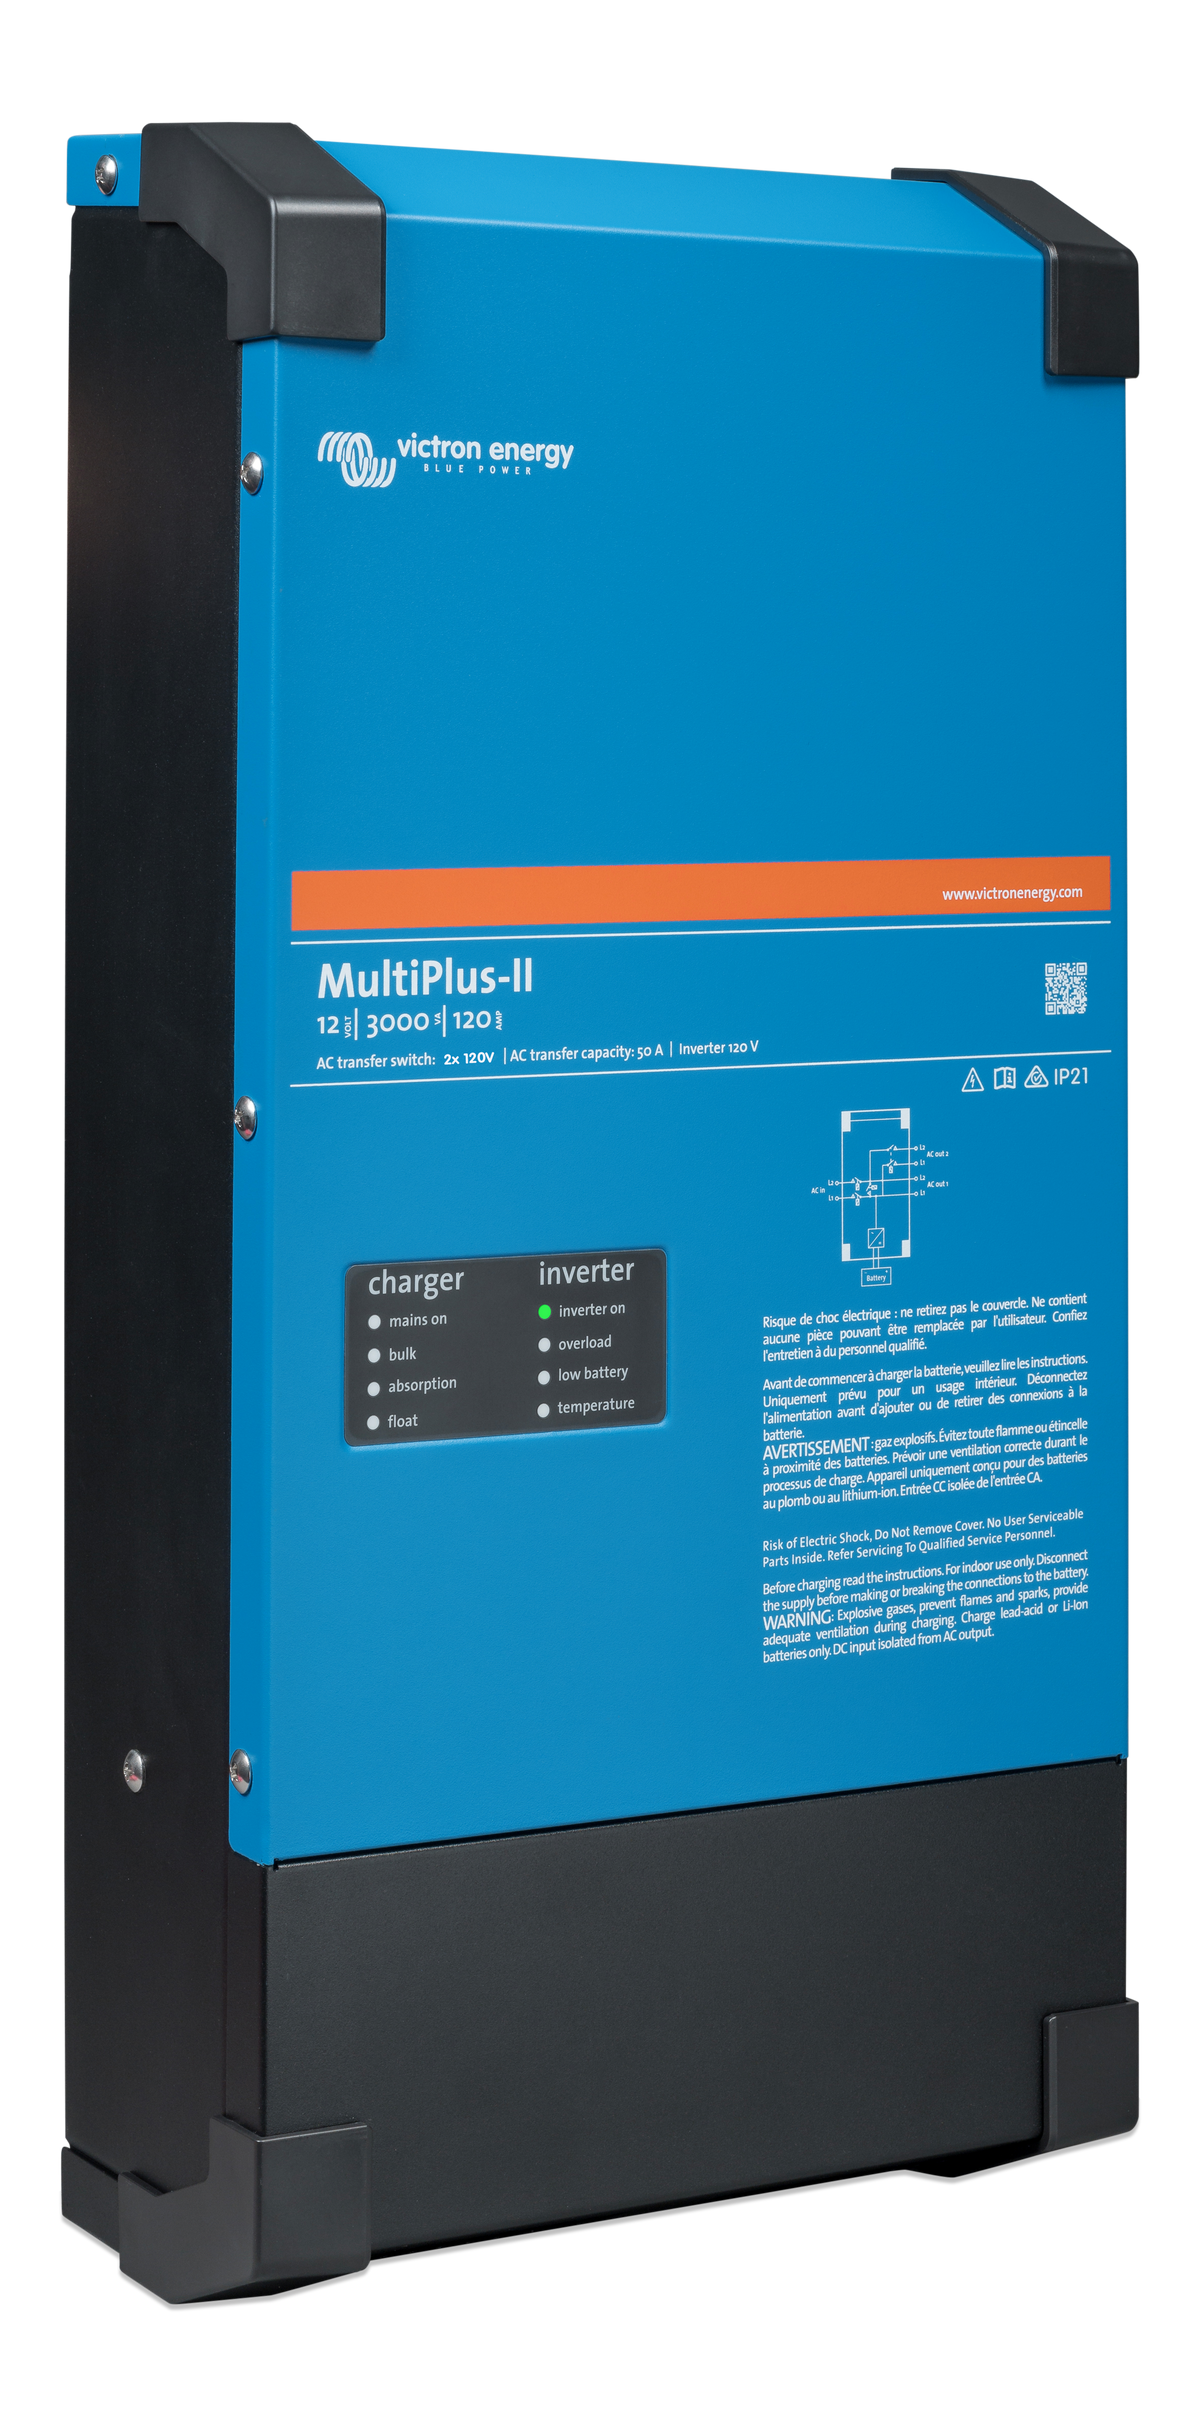 MultiPlus-II 2x 120V Inverter Charger — Intelligent Controls